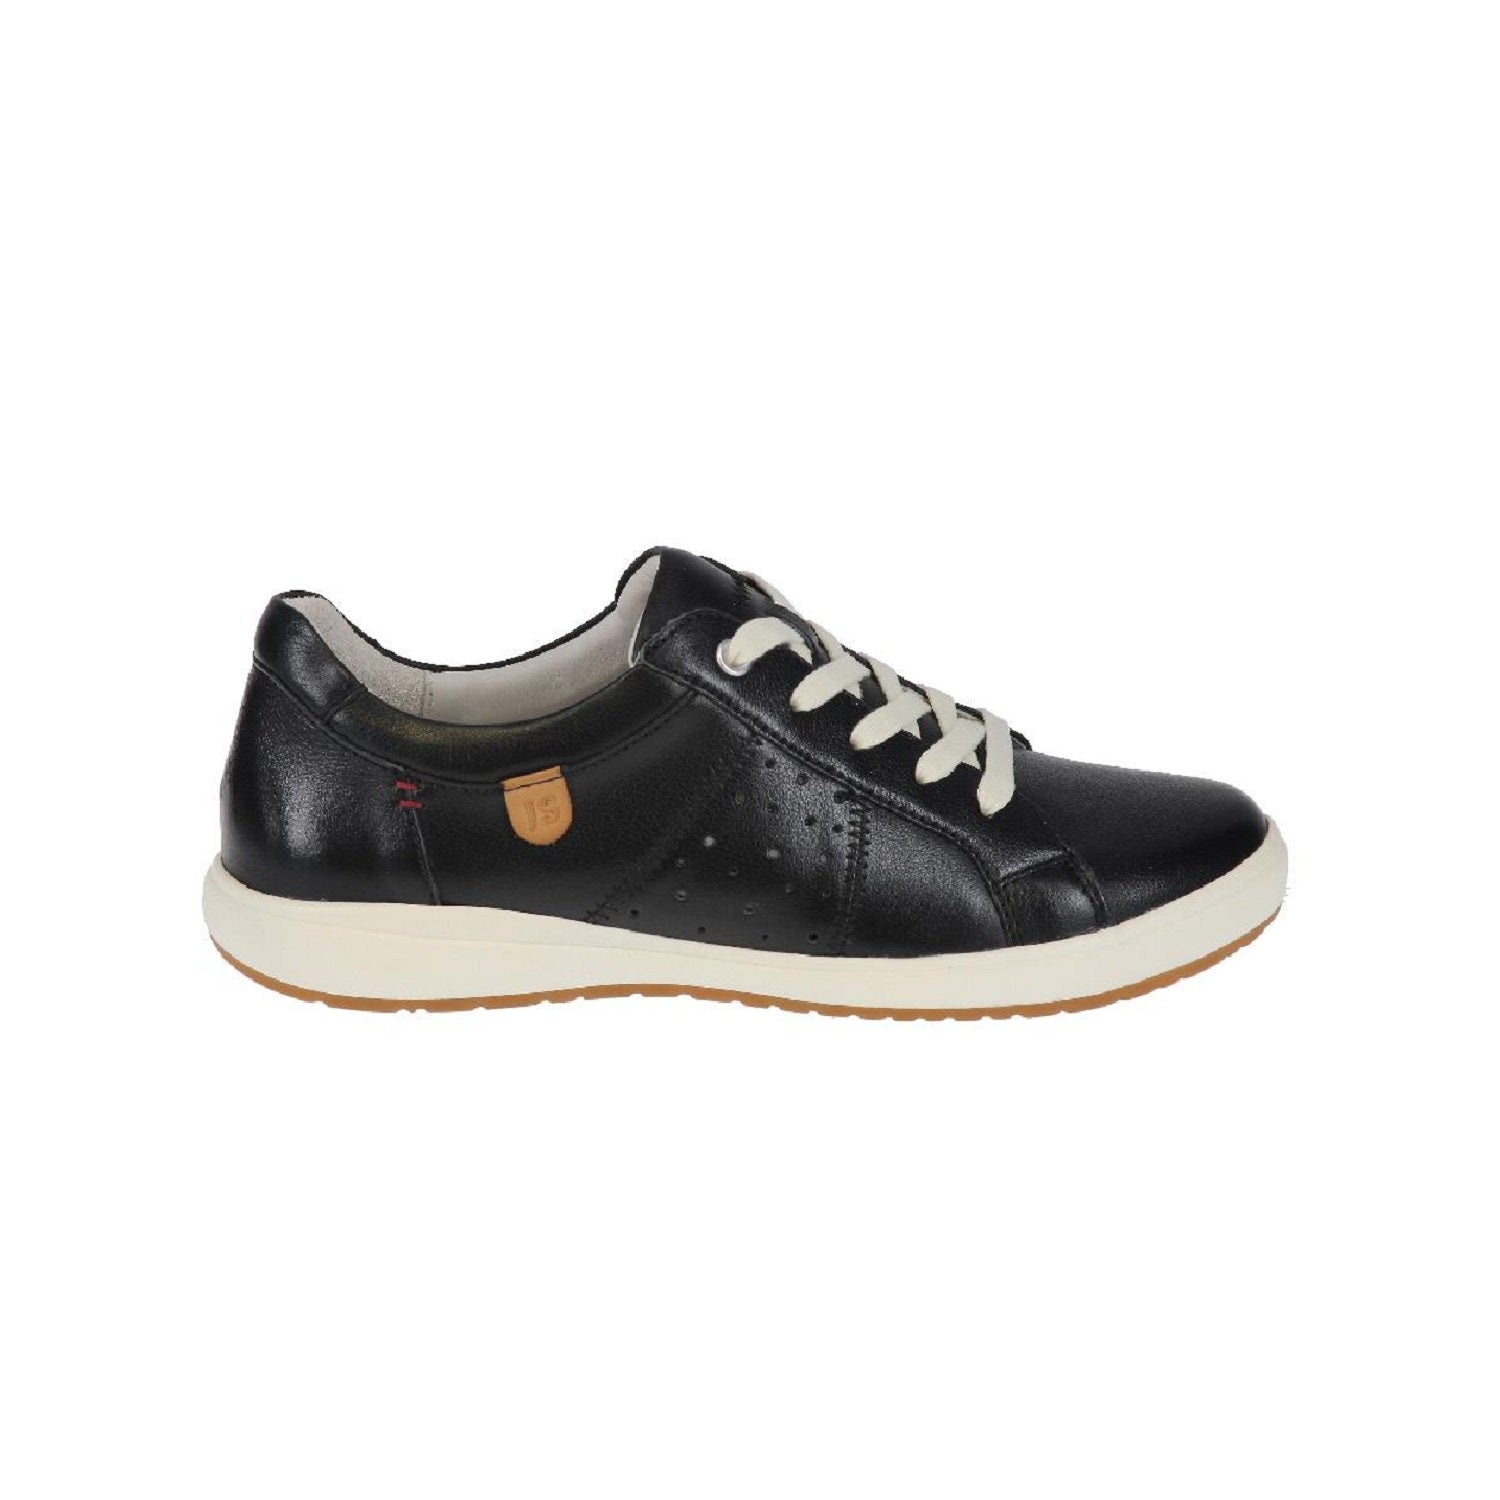 Josef Seibel Leather Loafers & Slip-Ons | Mercari